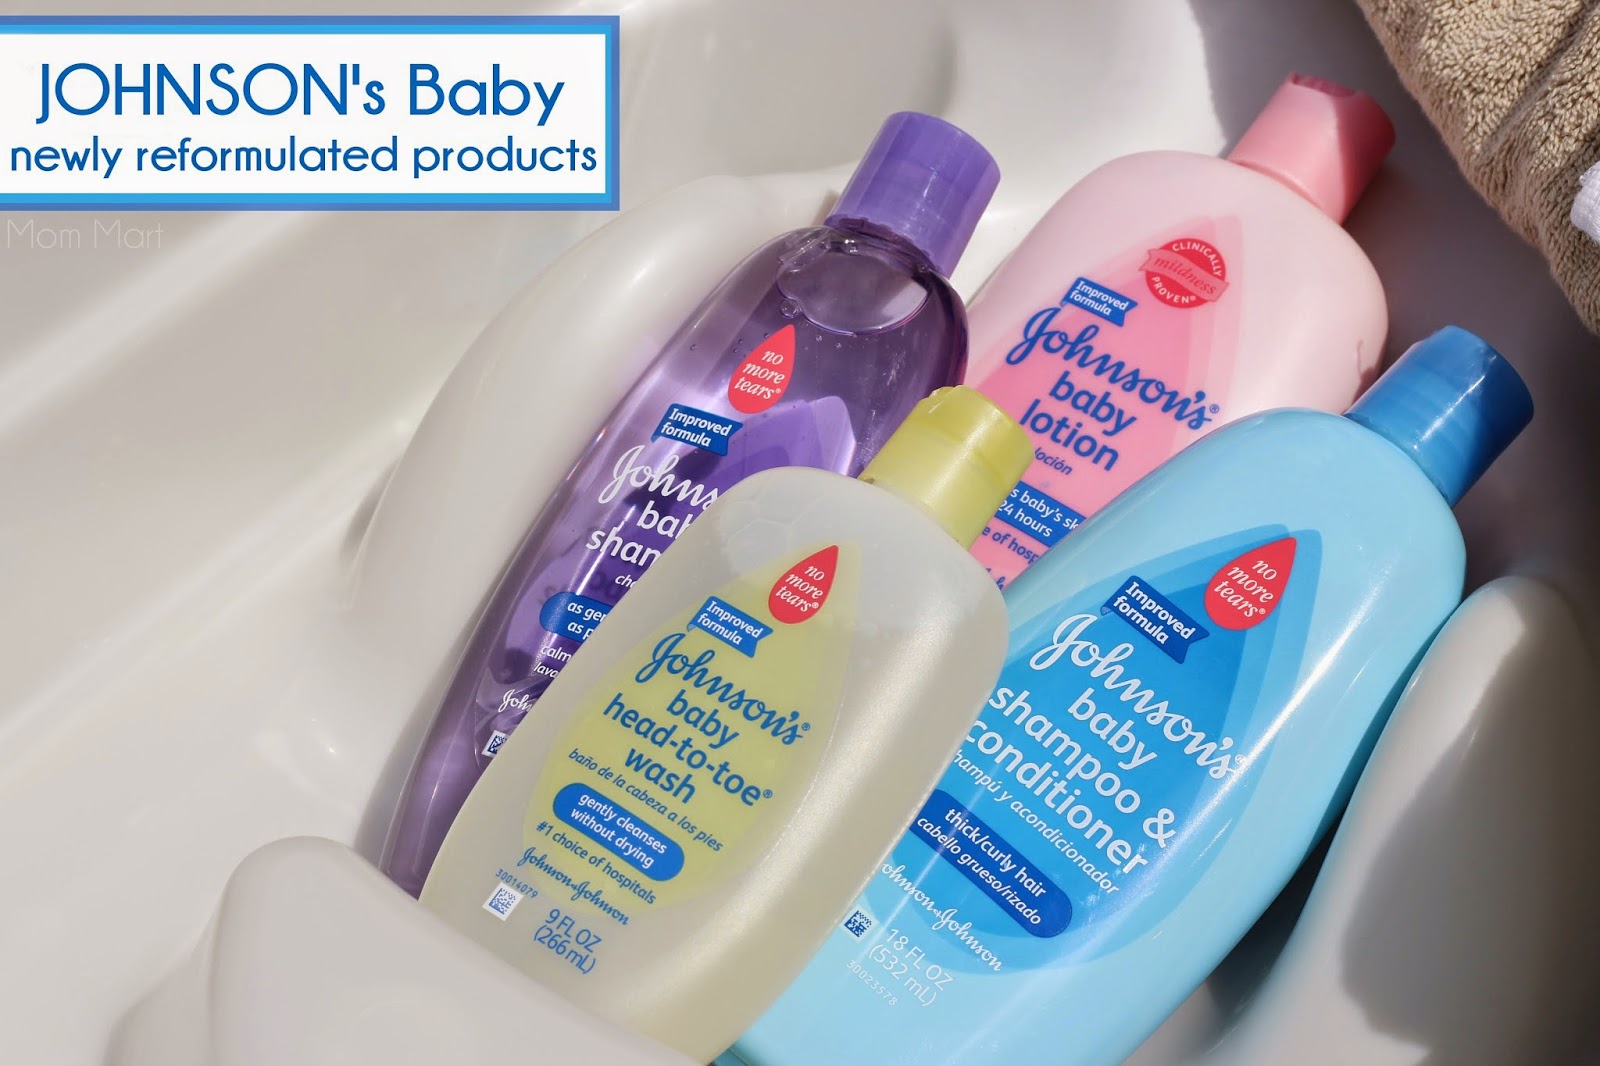 Johnson's Baby #PromiseToBaby newly reformulated products #JOHNSONSBaby #partner